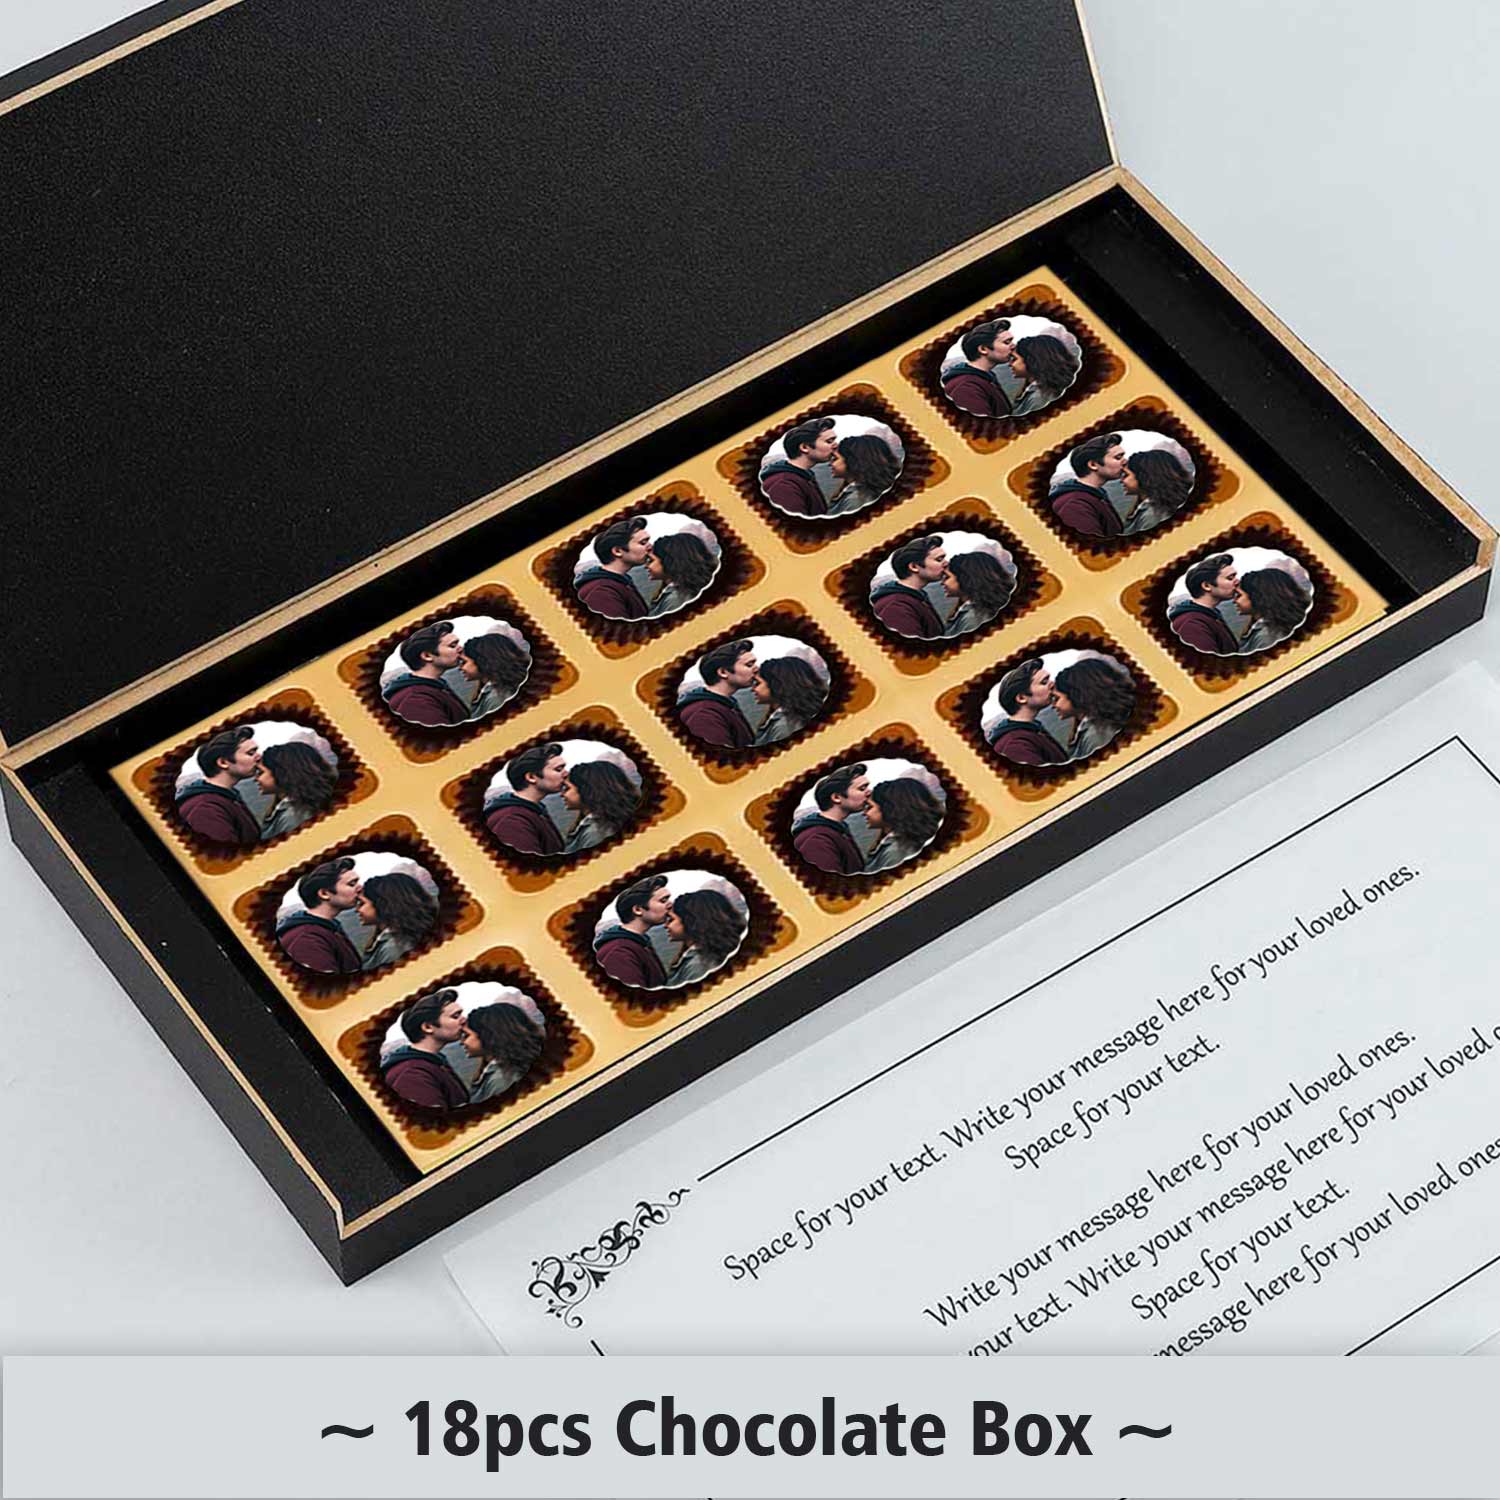 Name printed chocolates to congratulate the couple